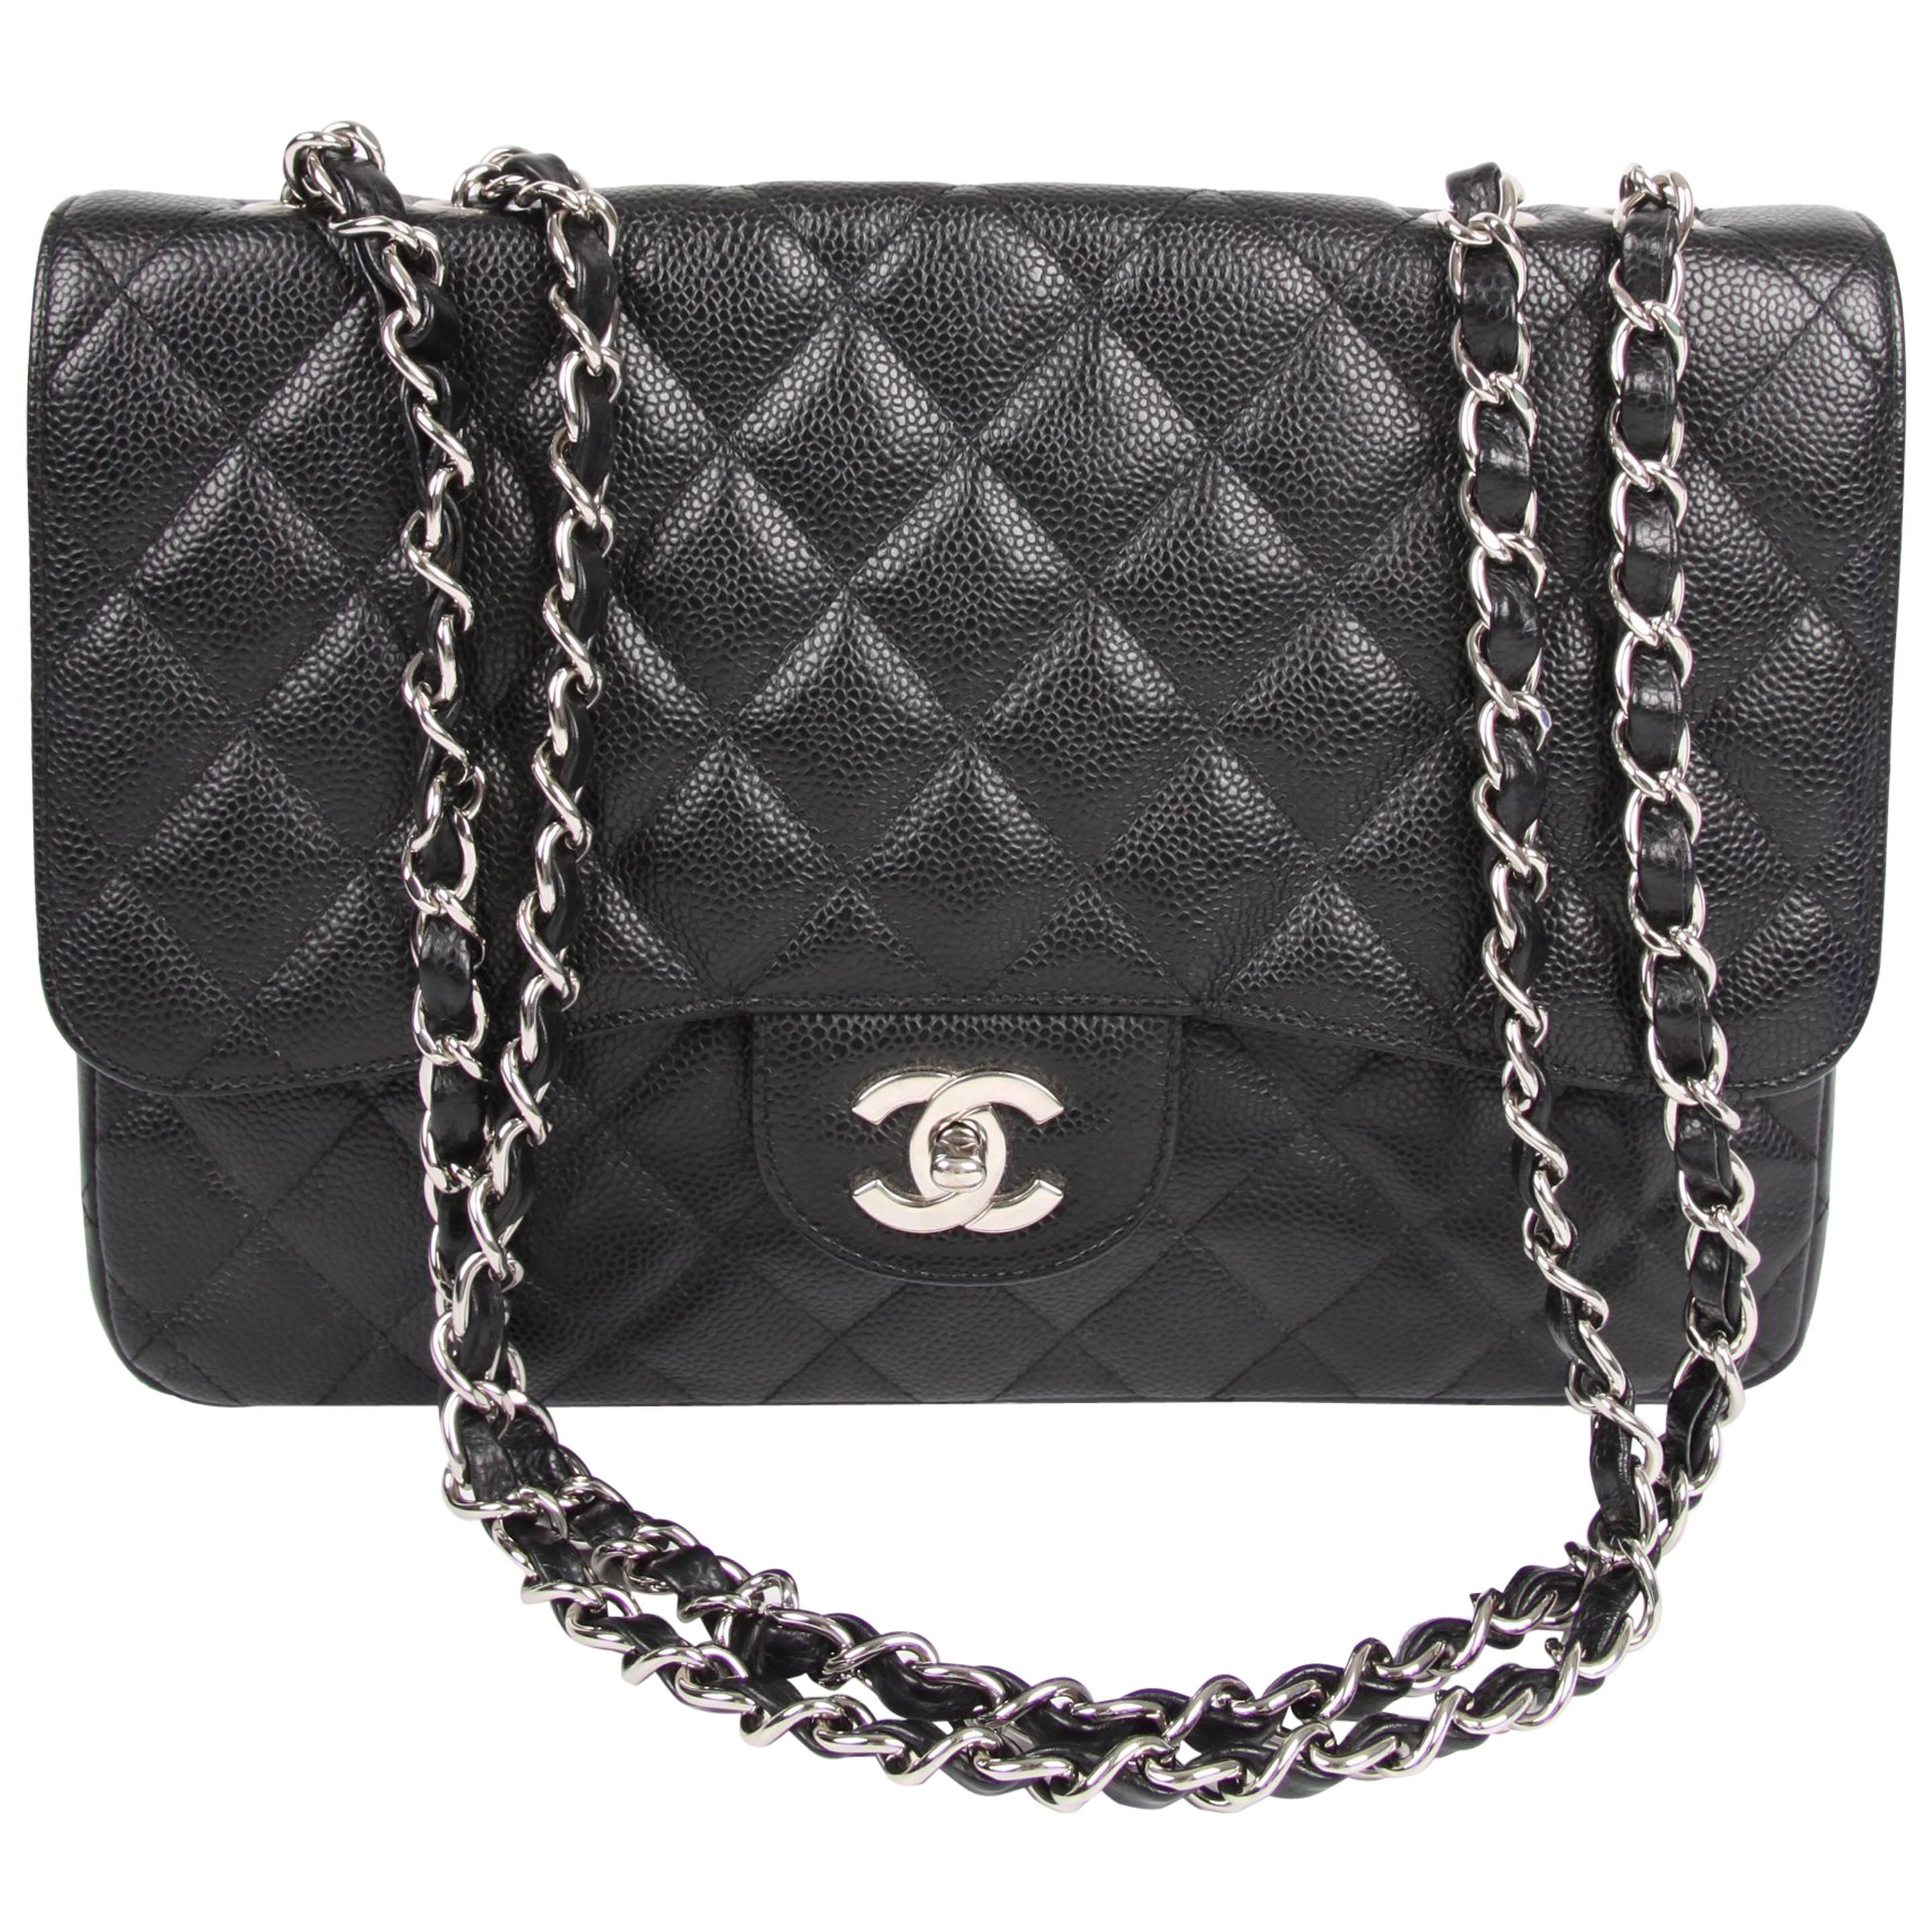 Chanel 2.55 Timeless Jumbo Single Flap Bag - black caviar leather/silver